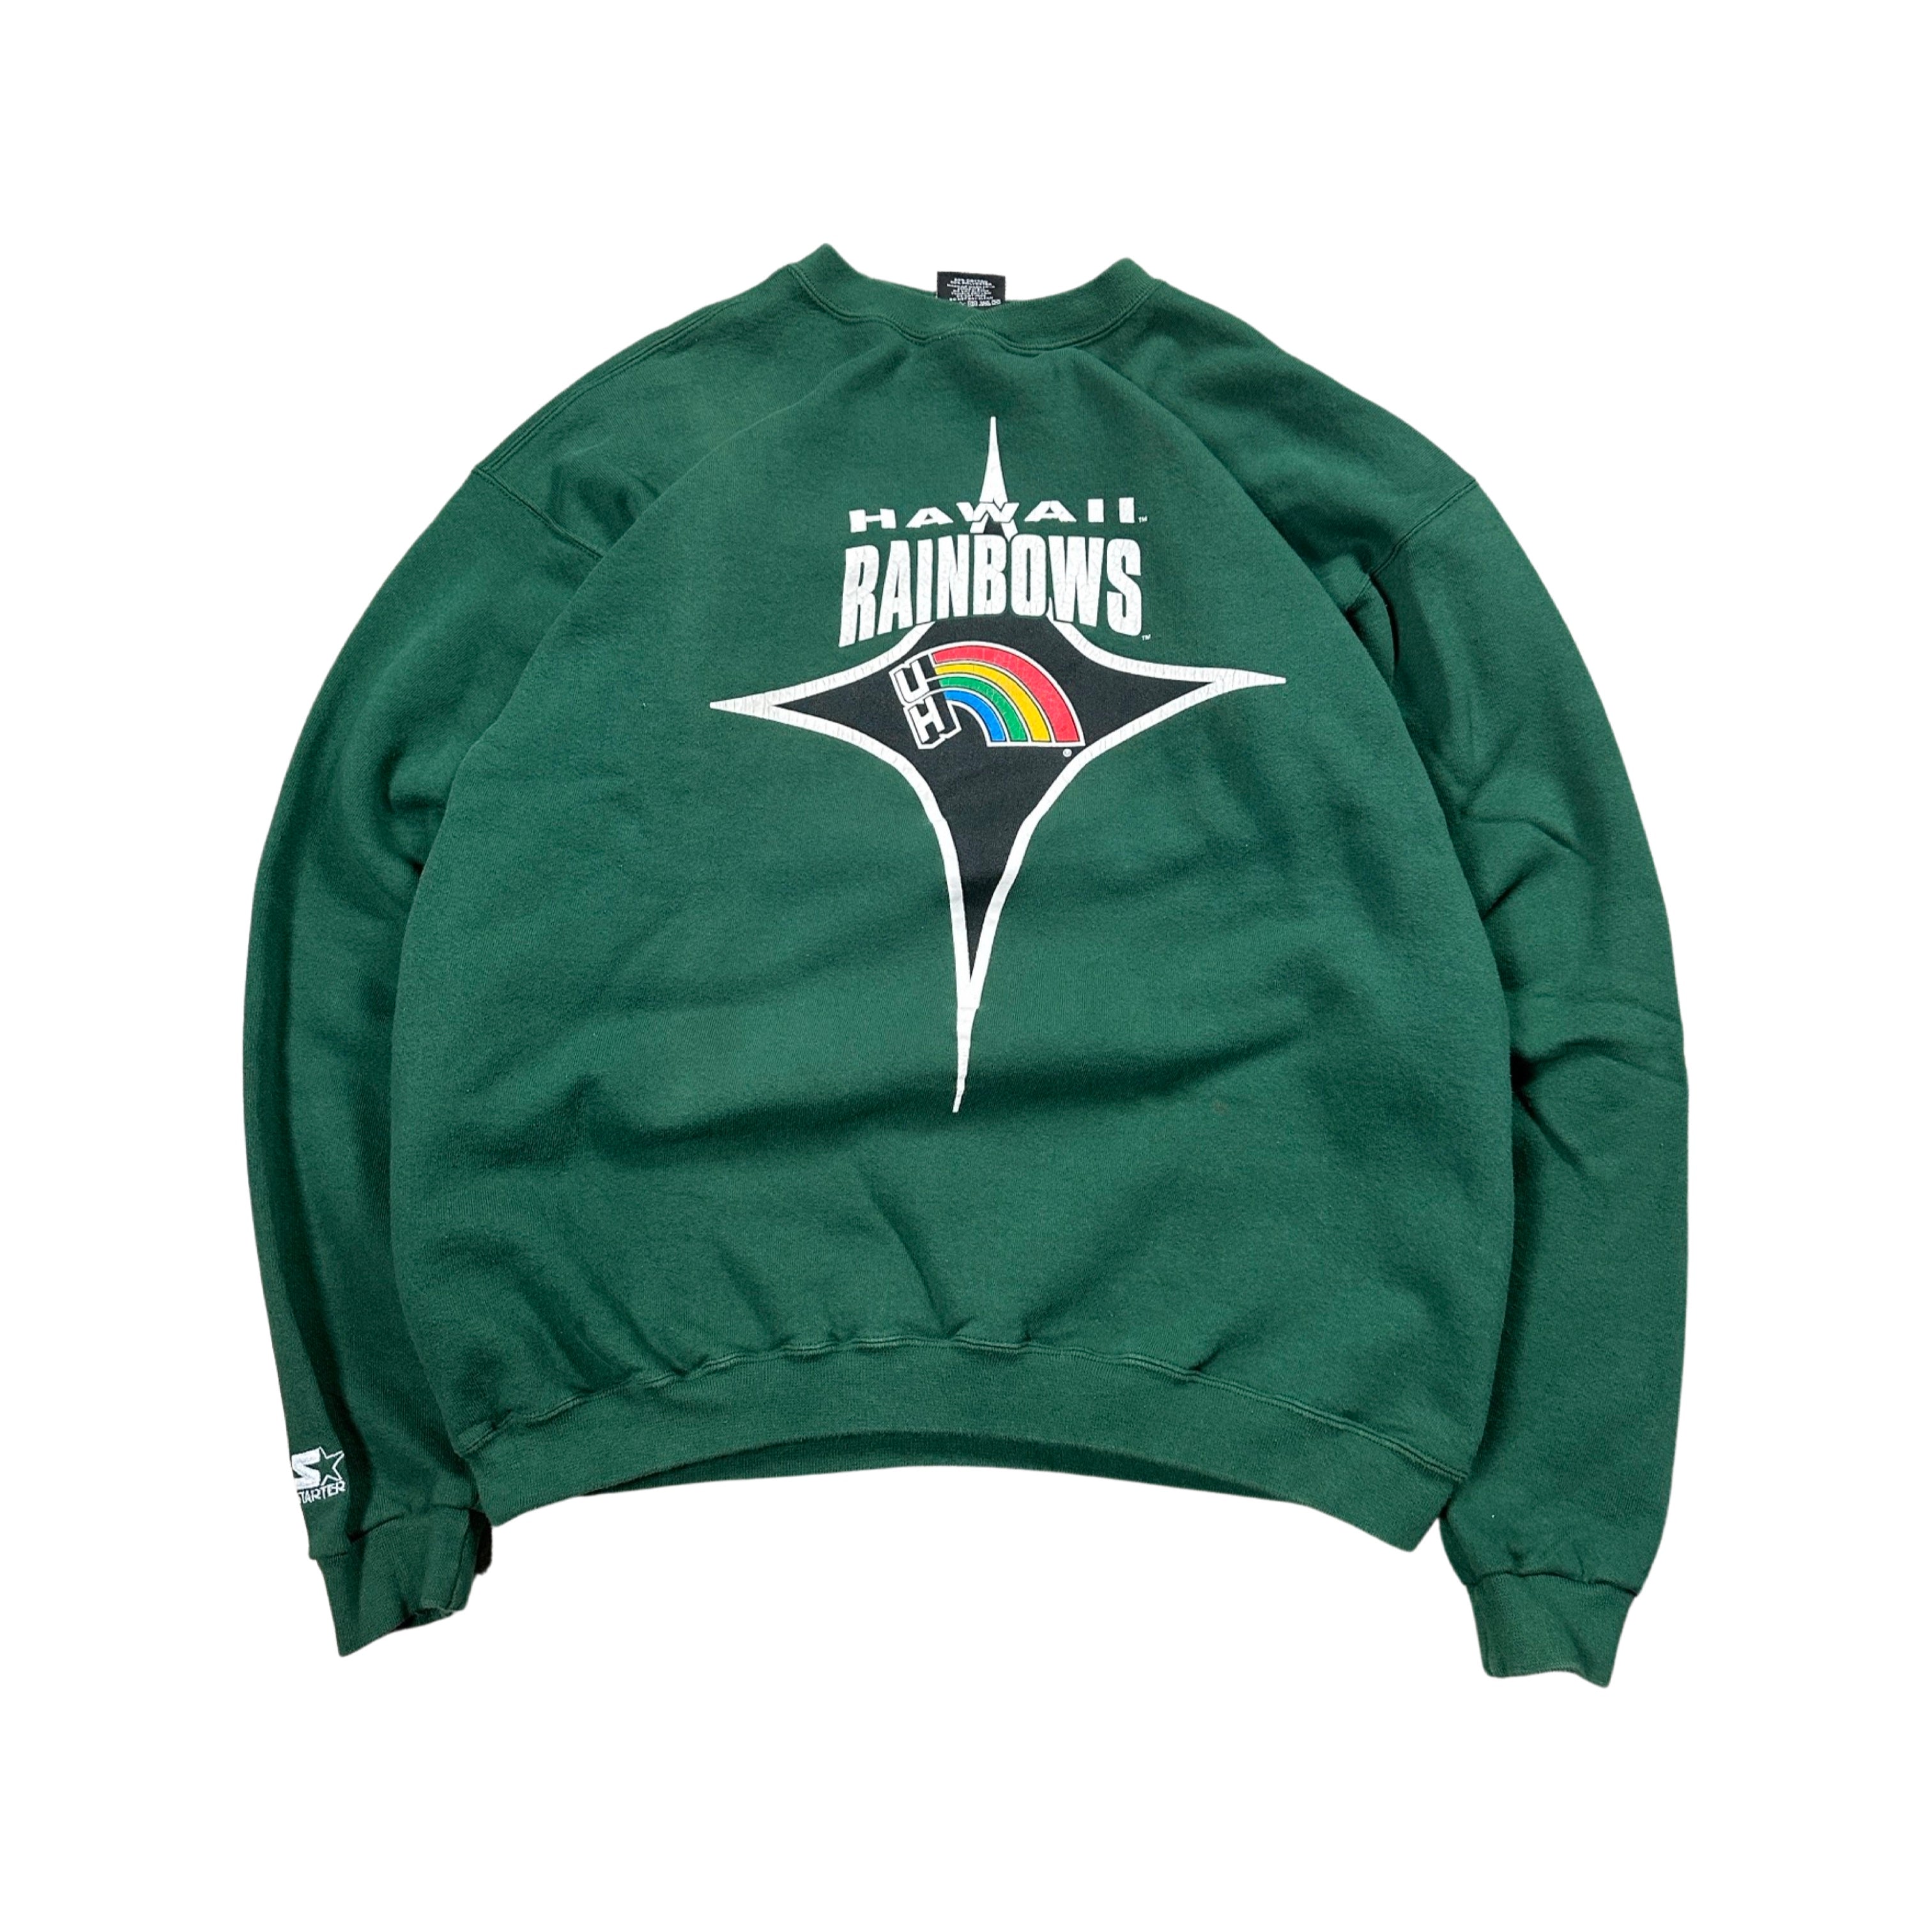 Green University of Hawaii Rainbows 90s Sweater (XL)